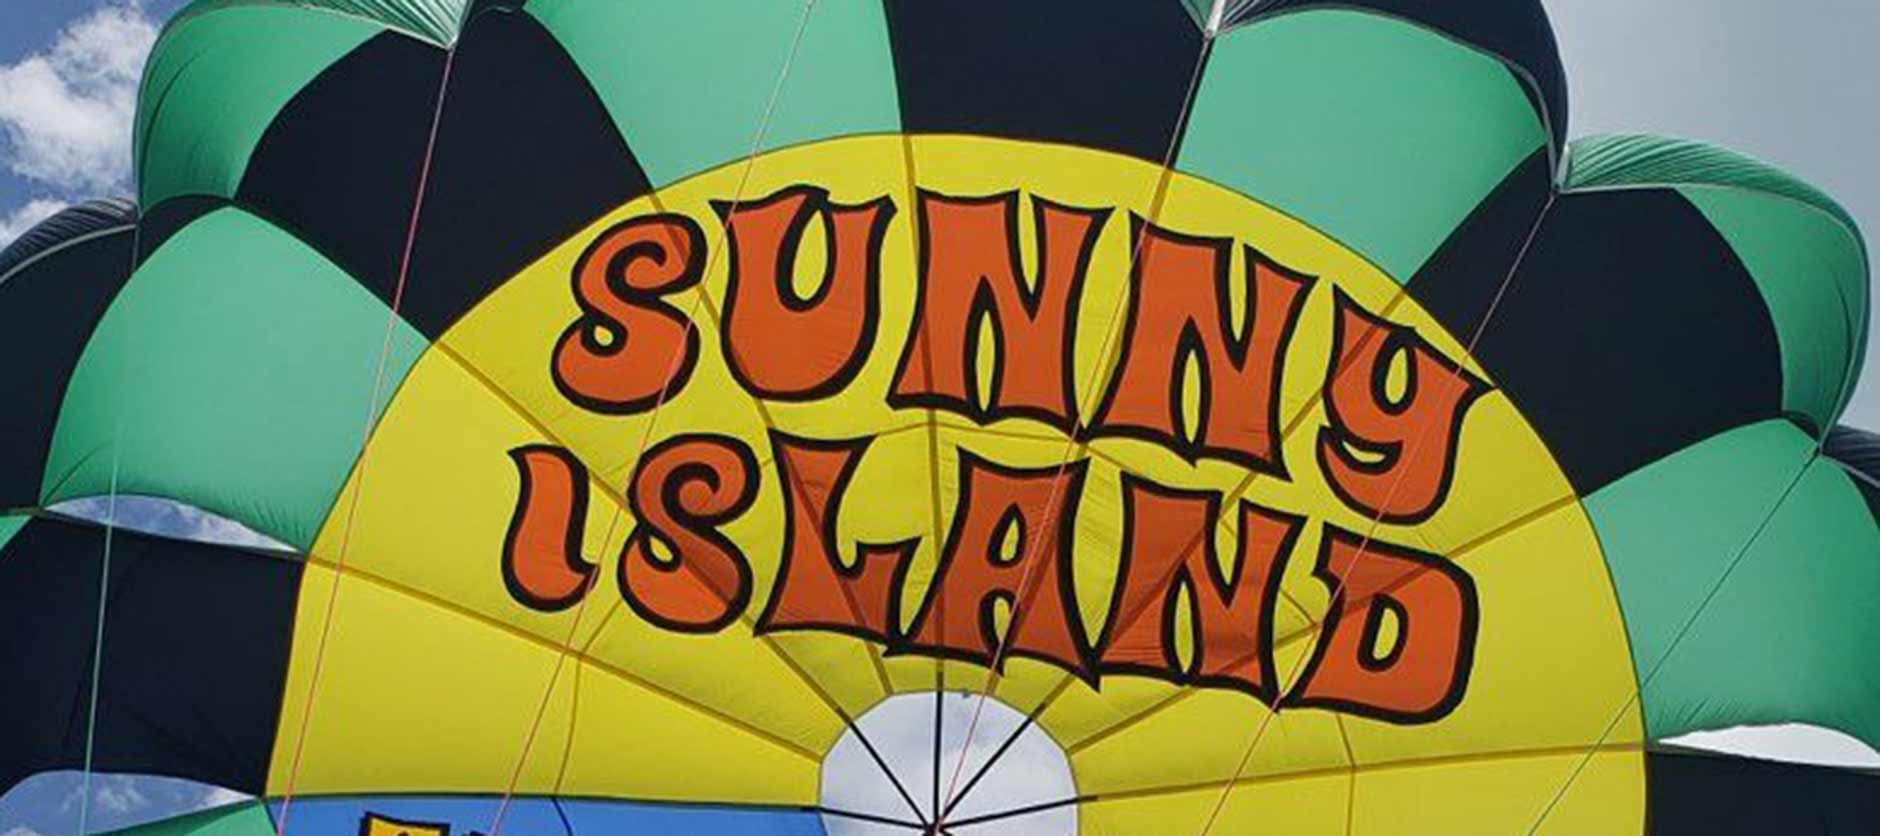 Sunny Island Adventures